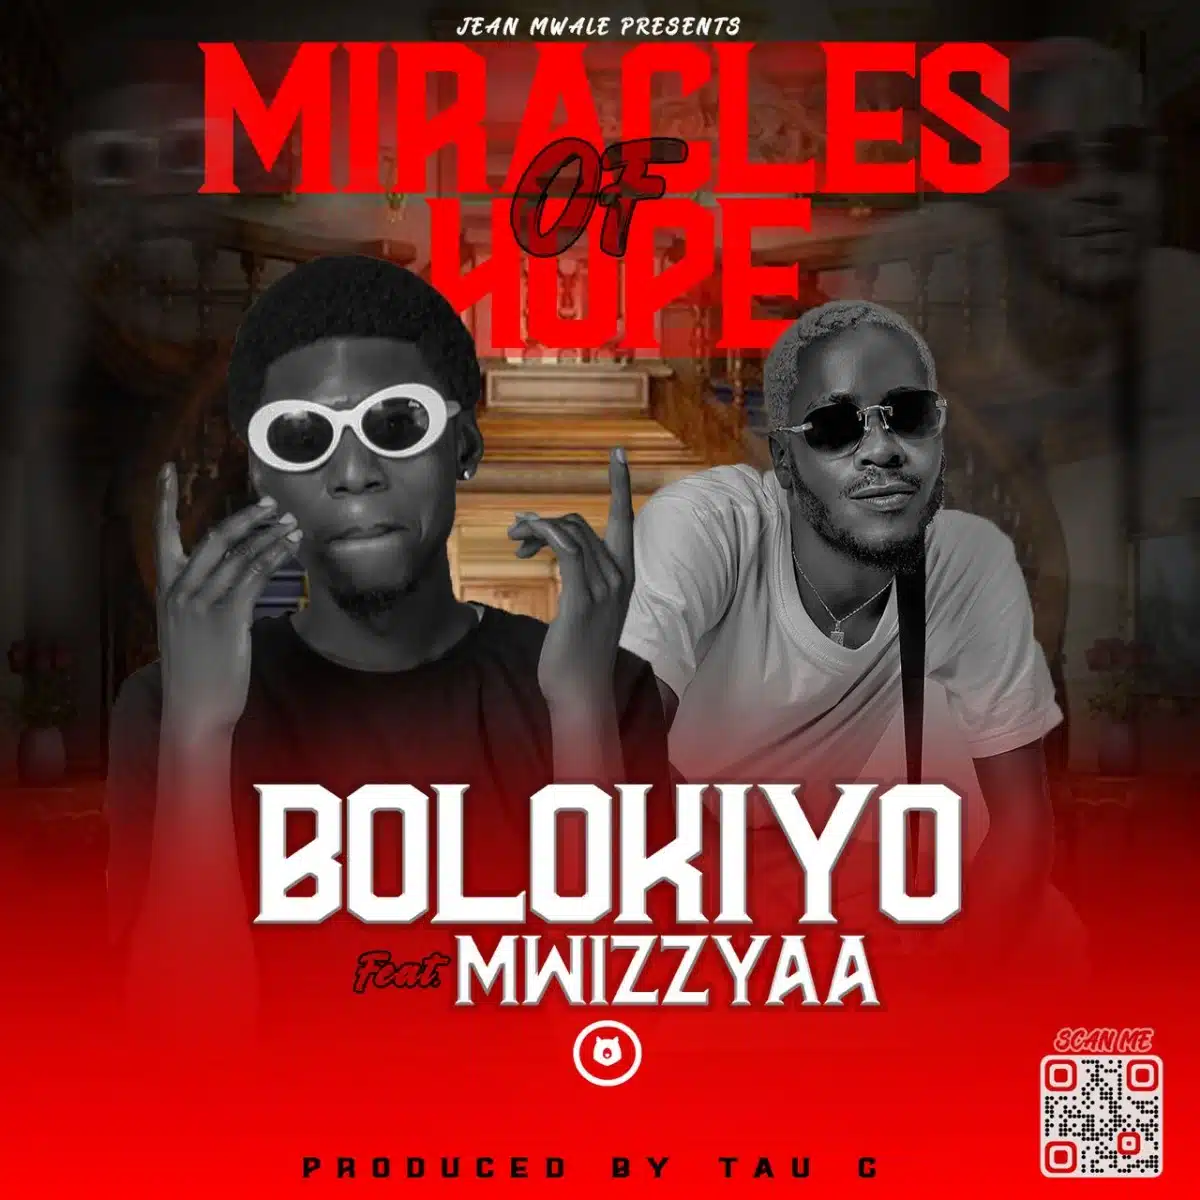 DOWNLOAD: Bolokiyo Ft. Mwizzya – “Miracles of Hope” Mp3